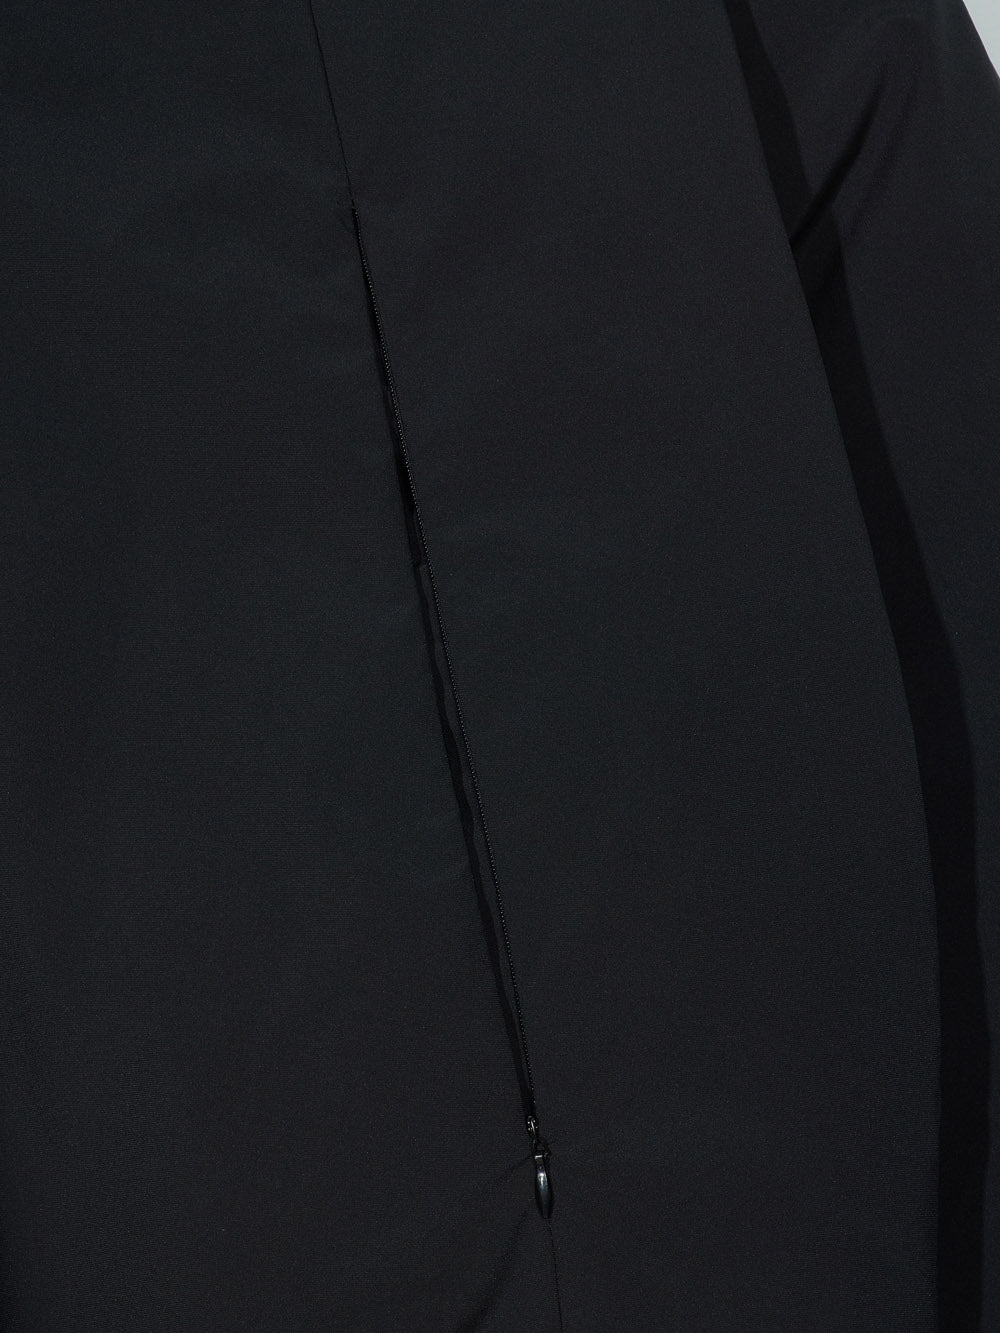 3M Thinsulate Featherless Short Padding Jacket in Black